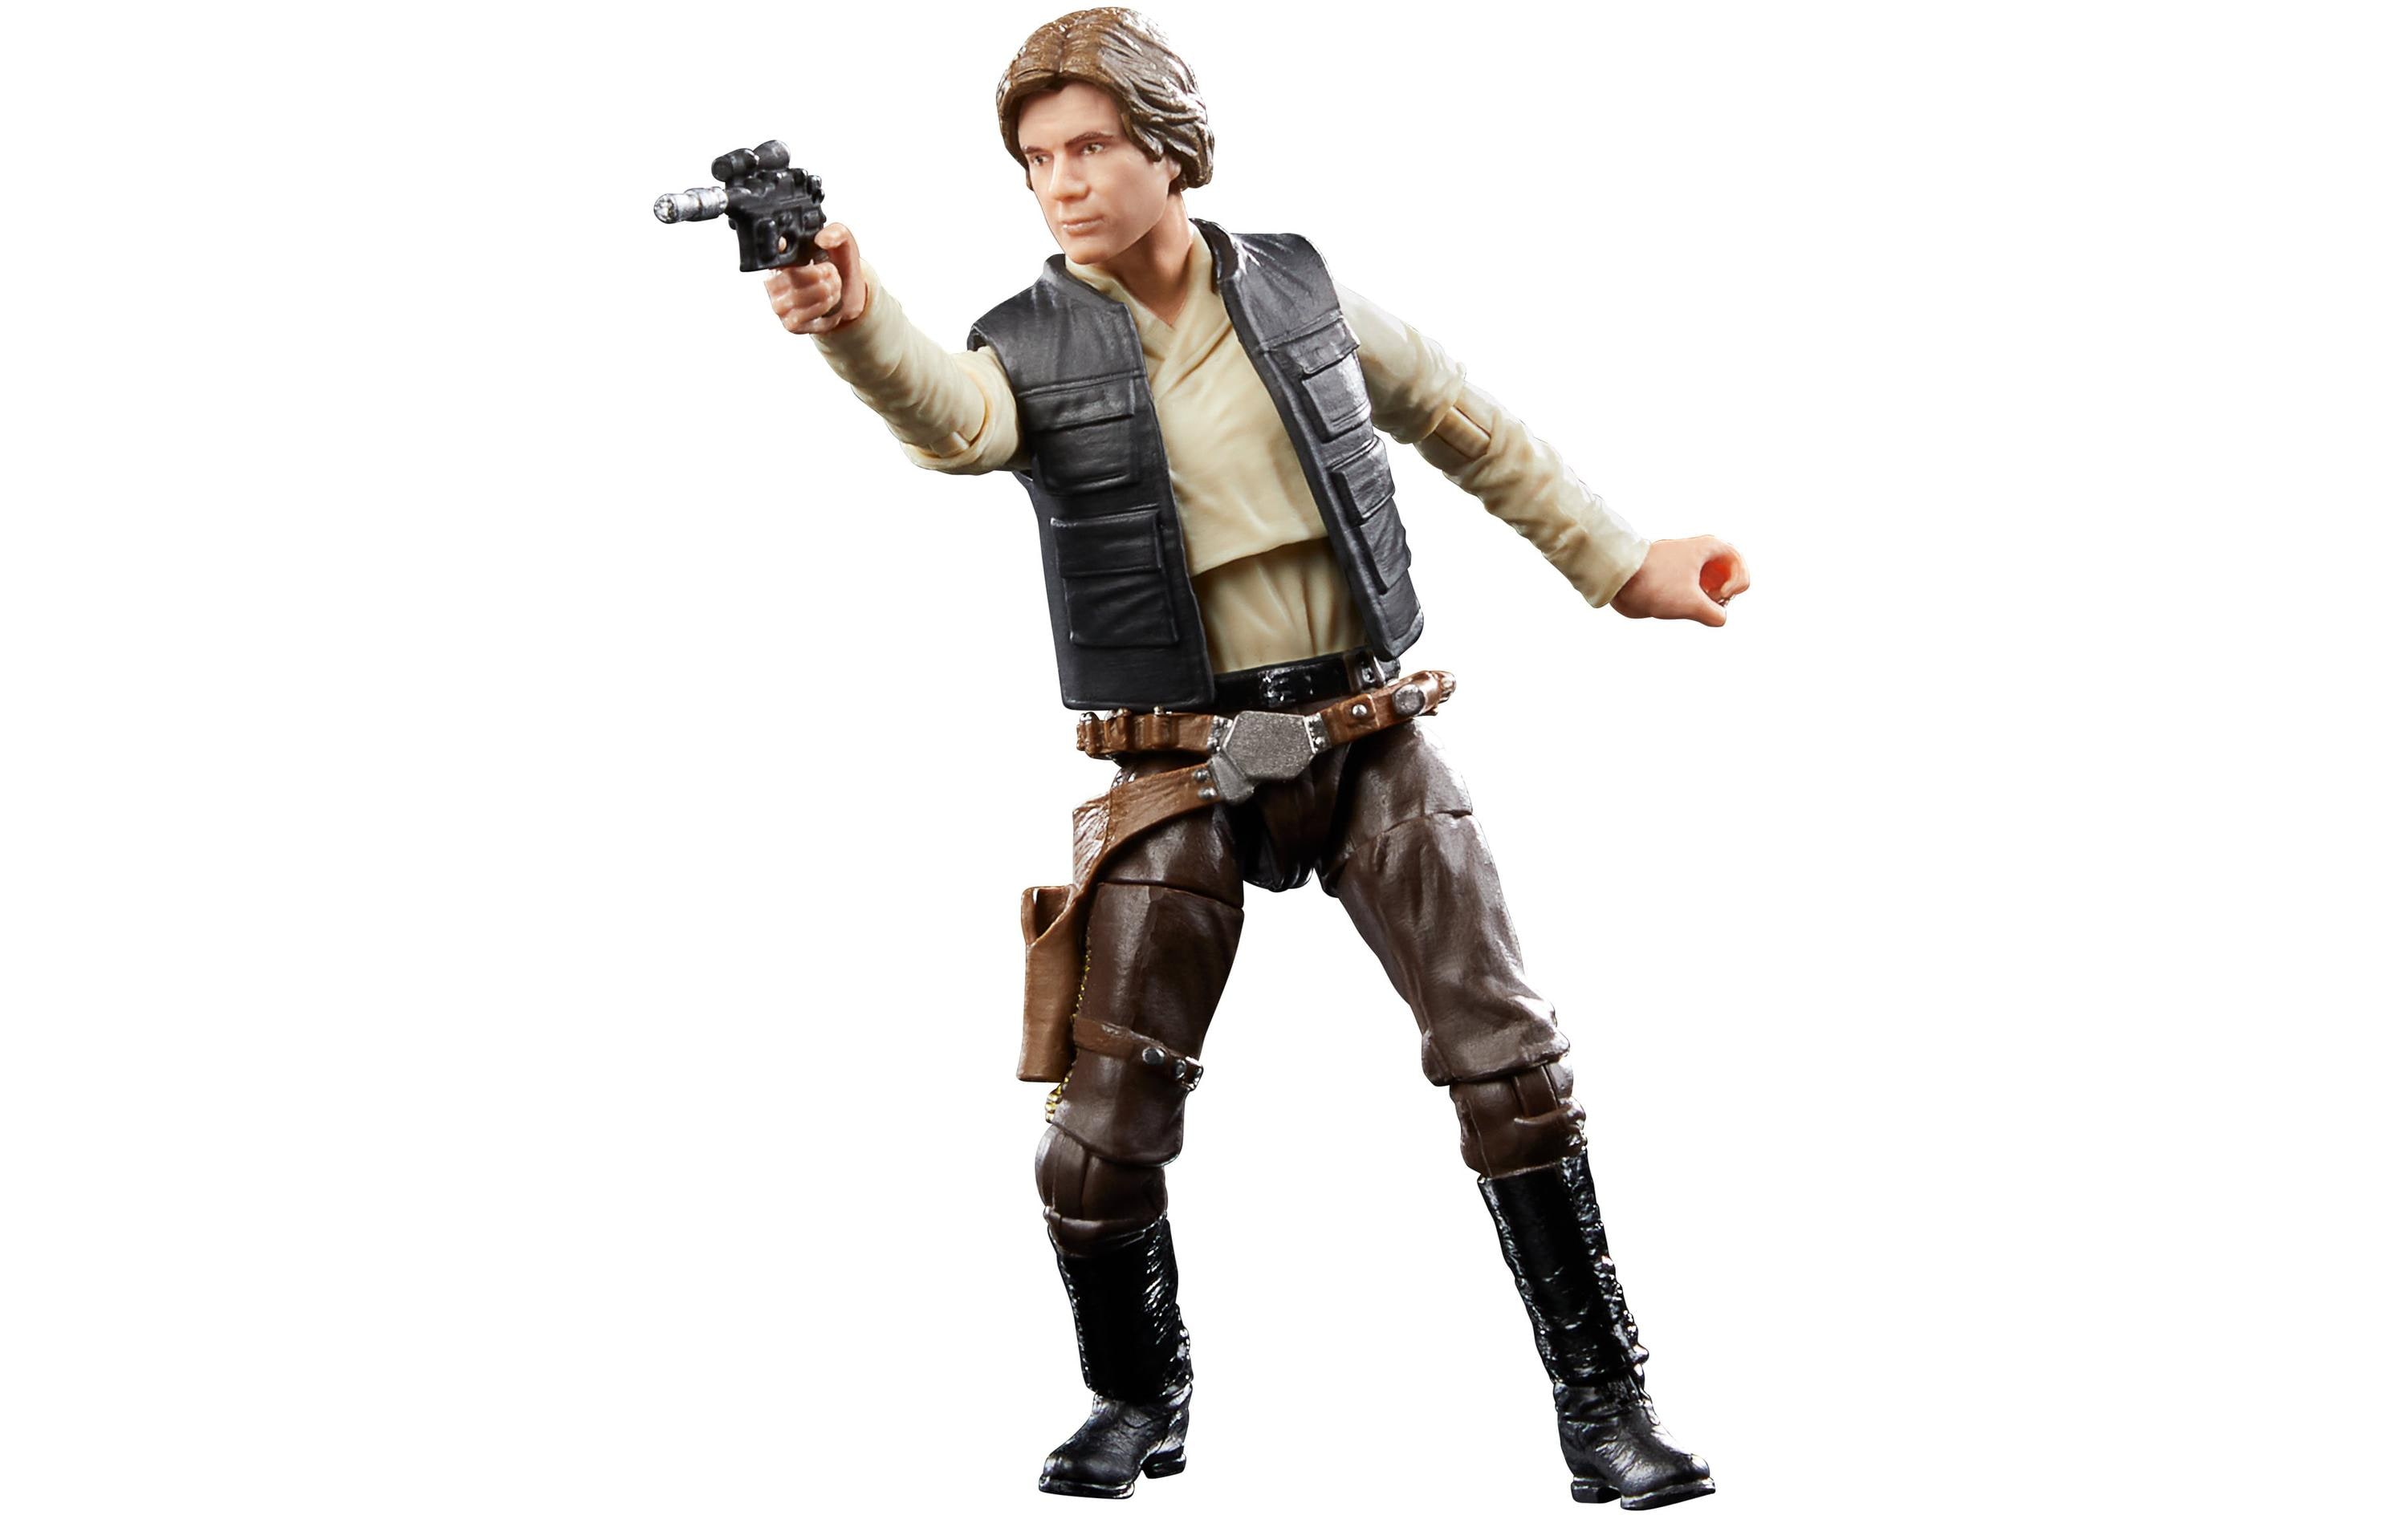 STAR WARS Star Wars Return of the Jedi: Han Solo